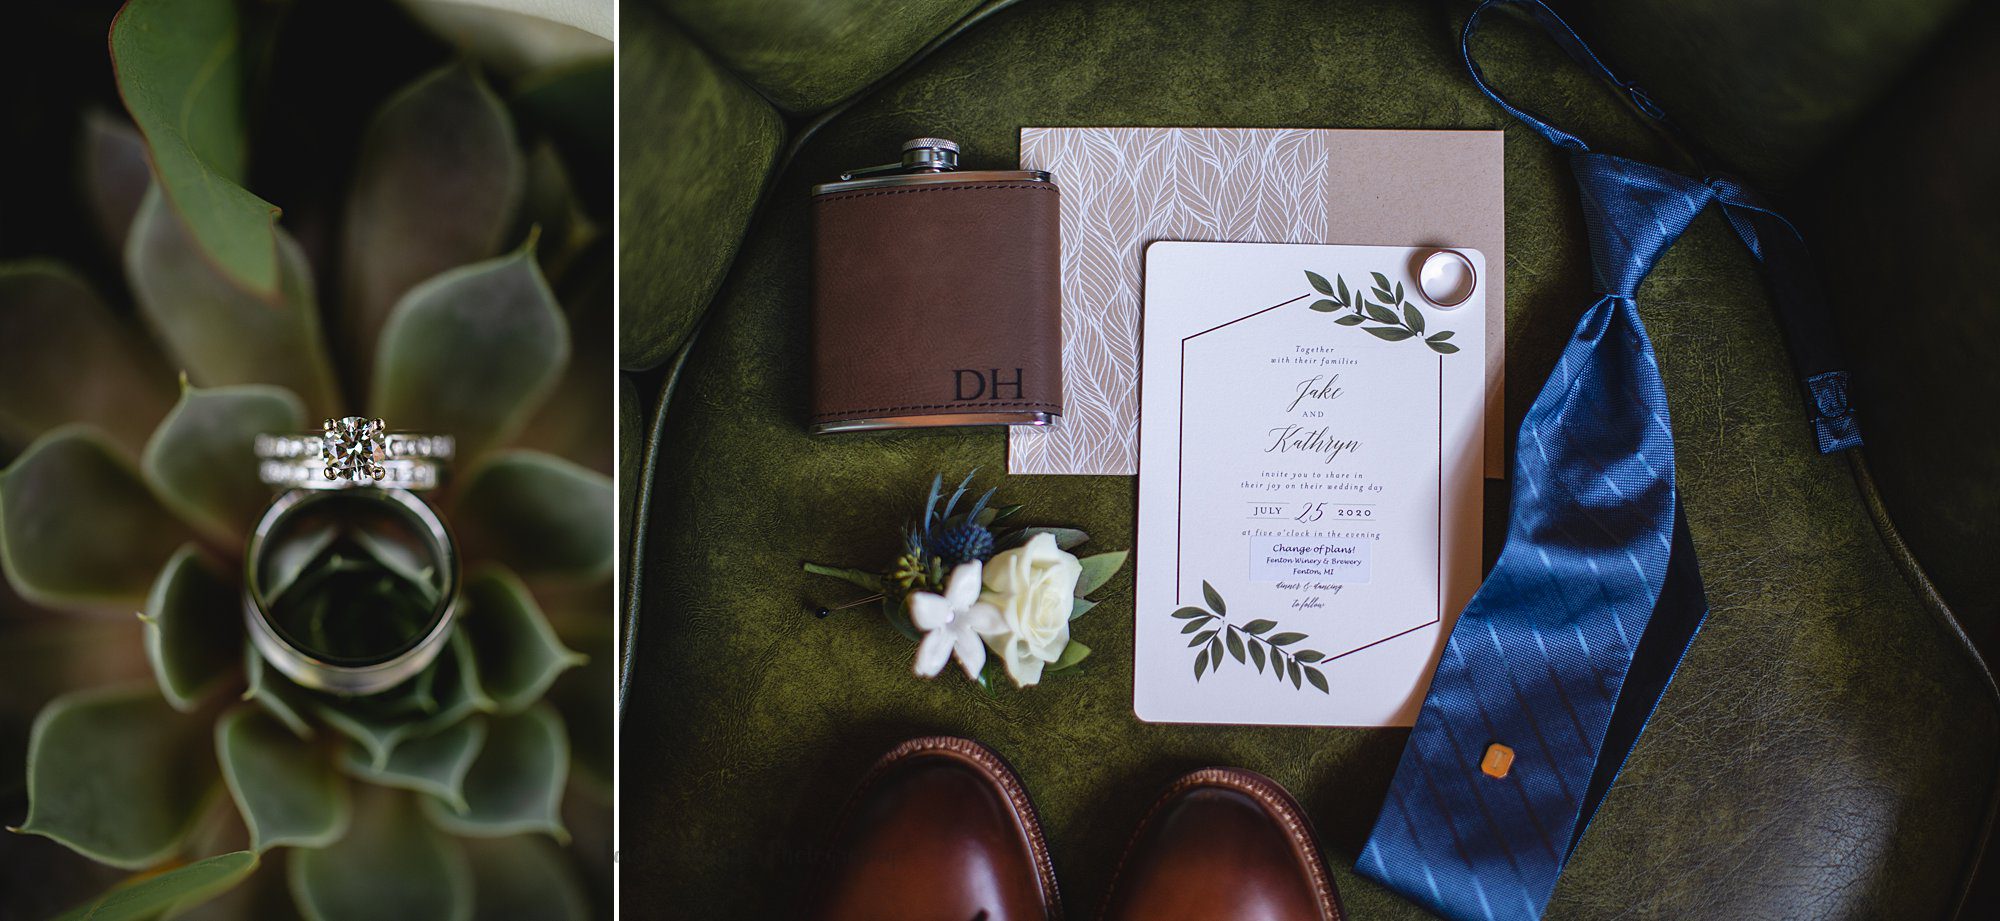 wedding details, grooms shoes, groom details flat lay